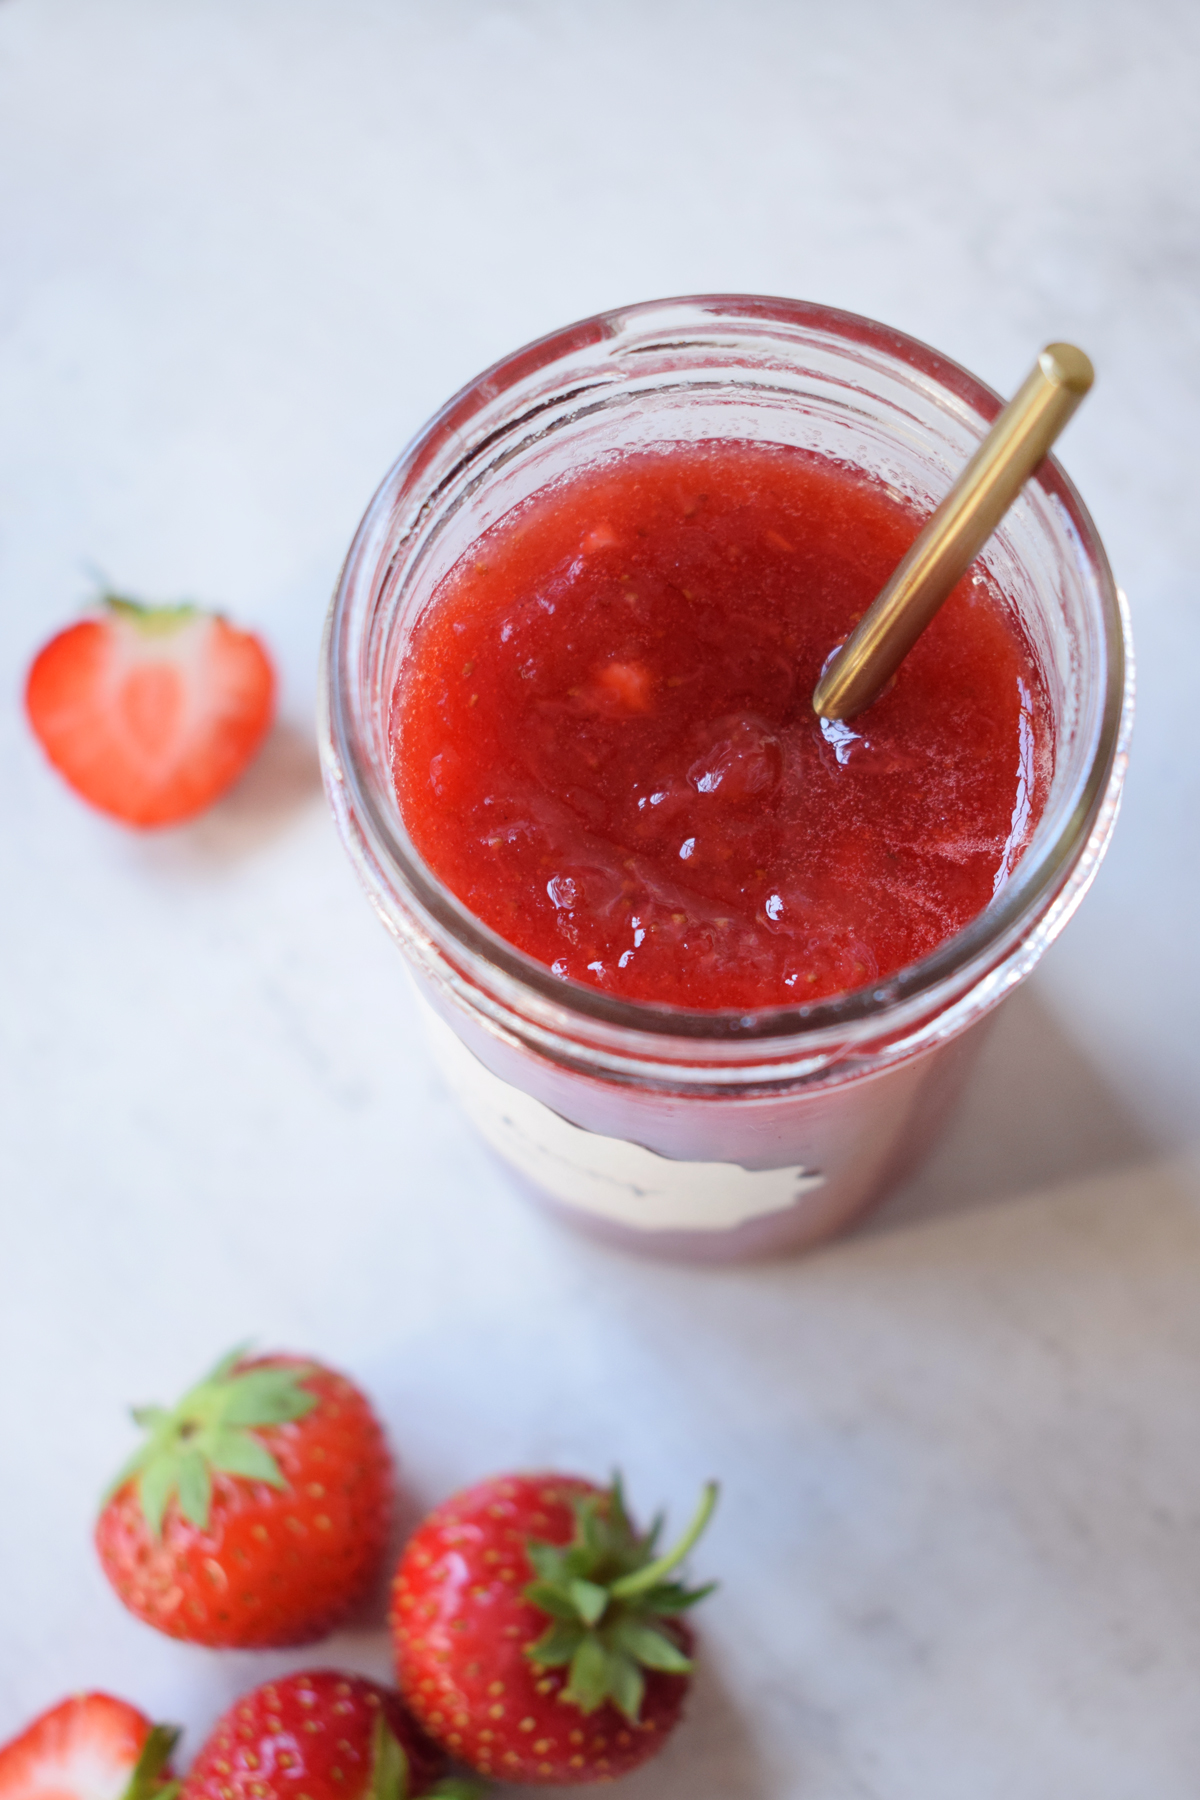 Easy Strawberry Jam (No Pectin & Small Batch) - Let's Eat Smart